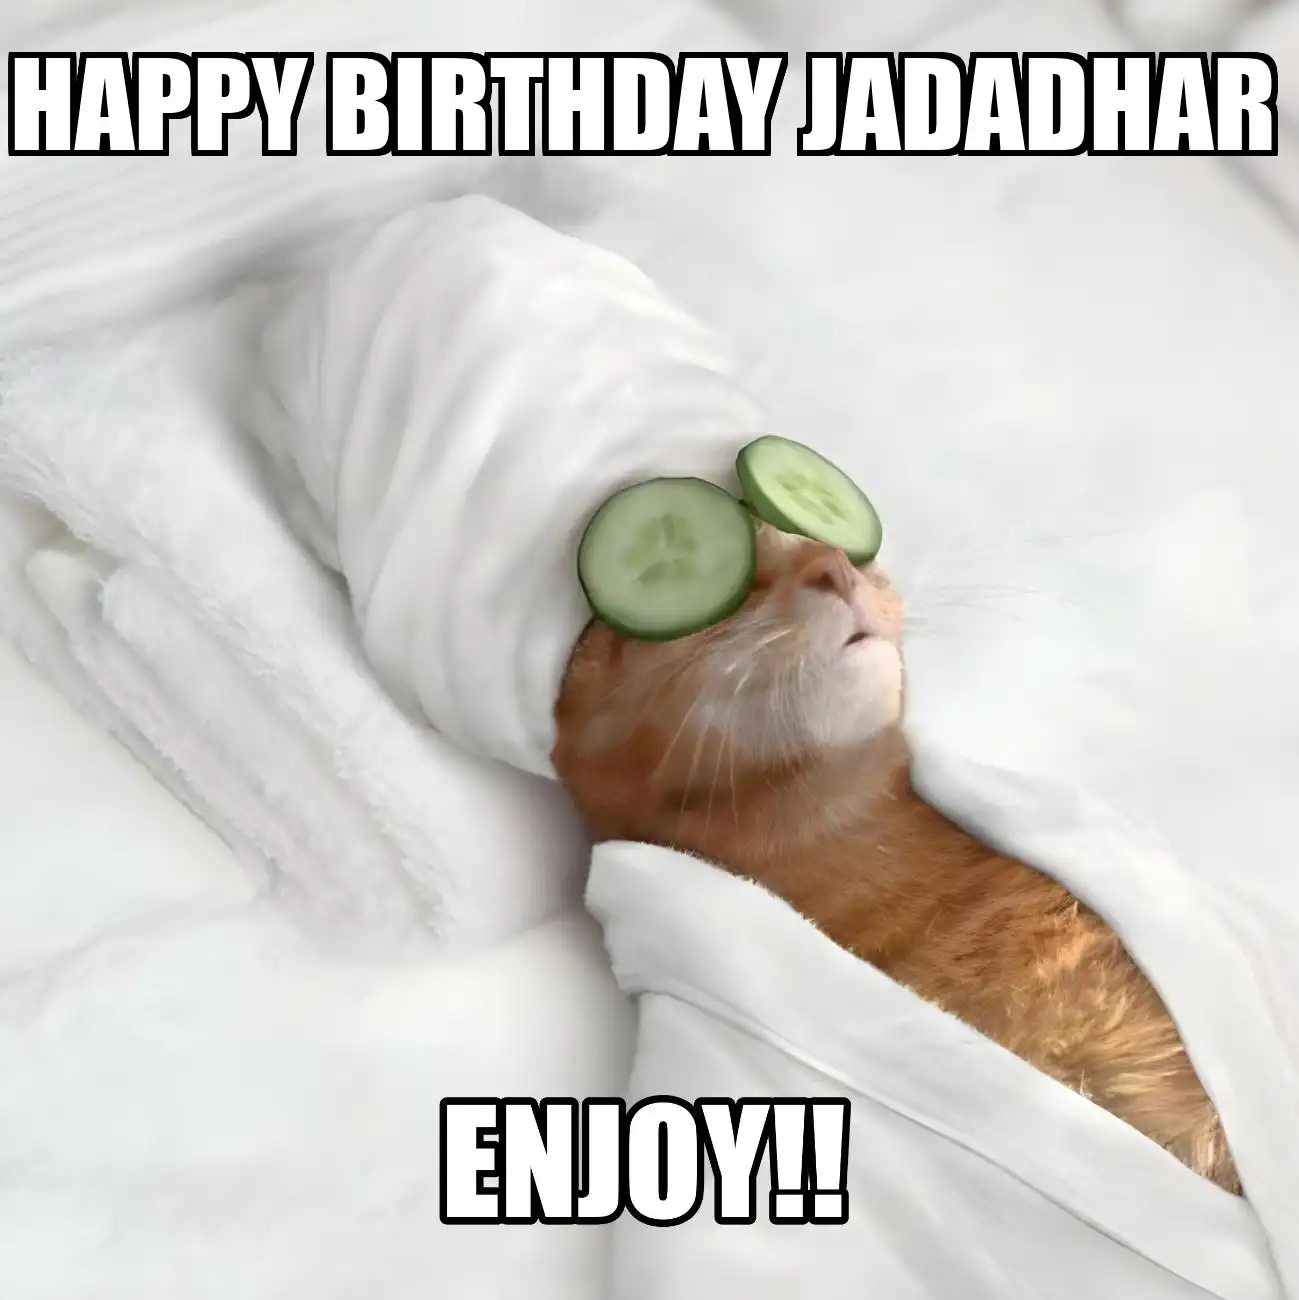 Happy Birthday Jadadhar Enjoy Cat Meme